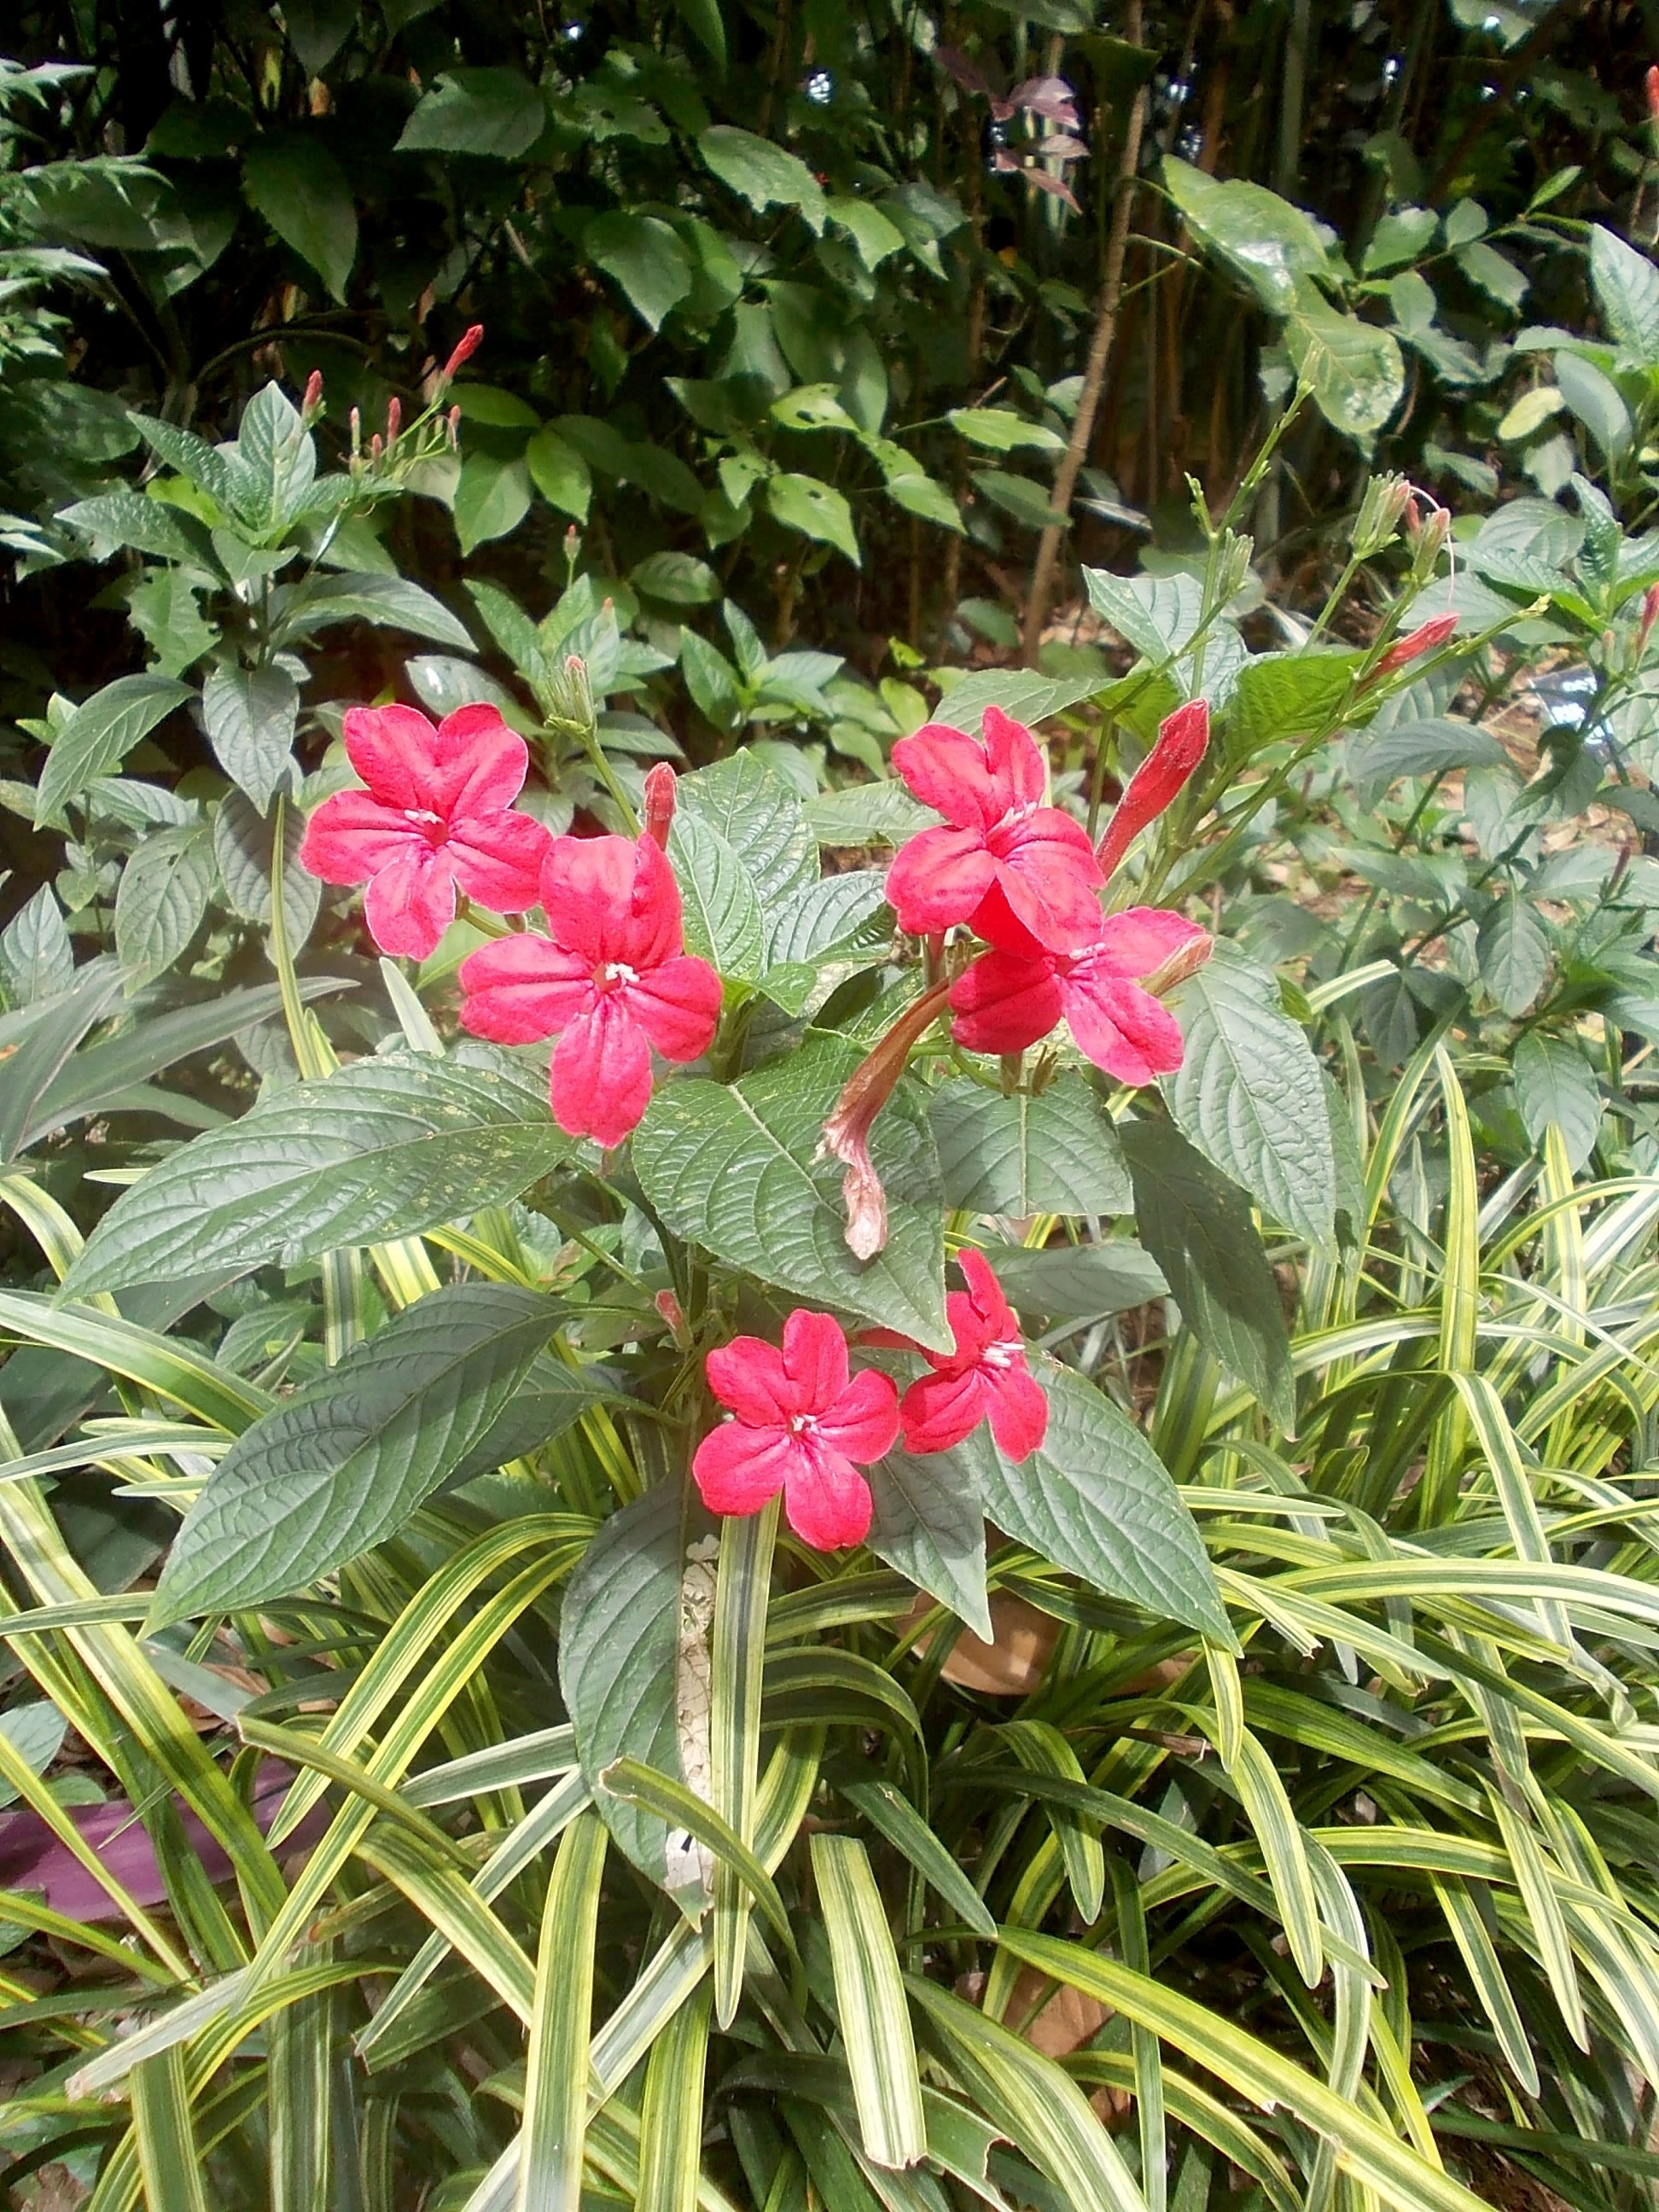 red 5 petaled flowers